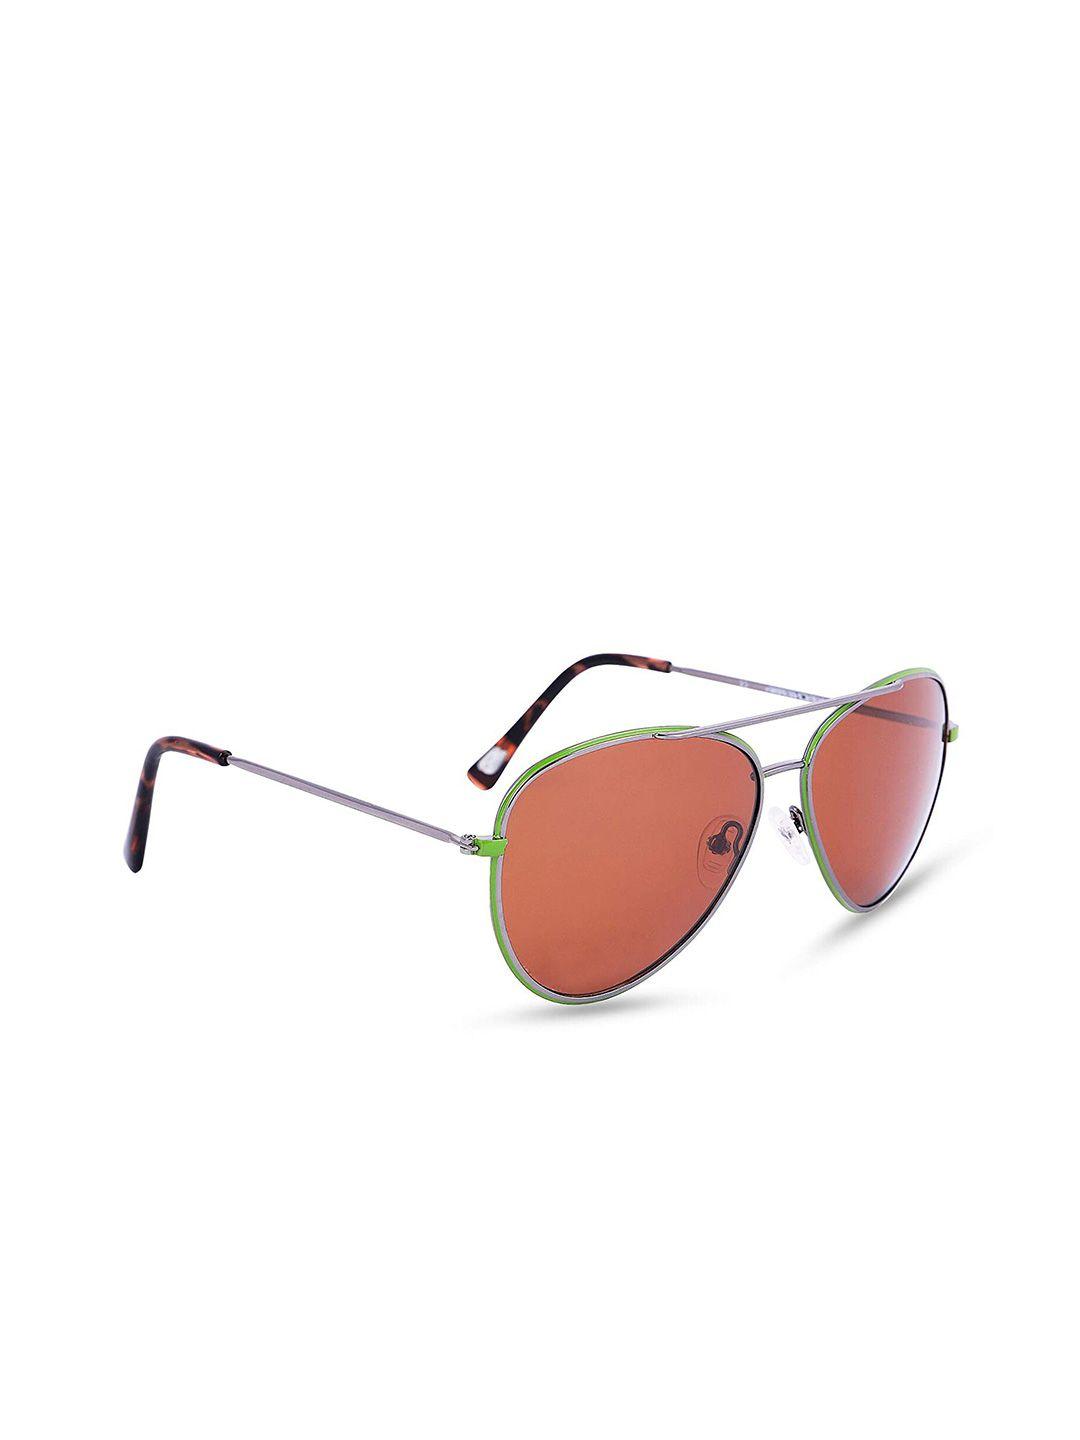 skechers unisex brown sunglasses